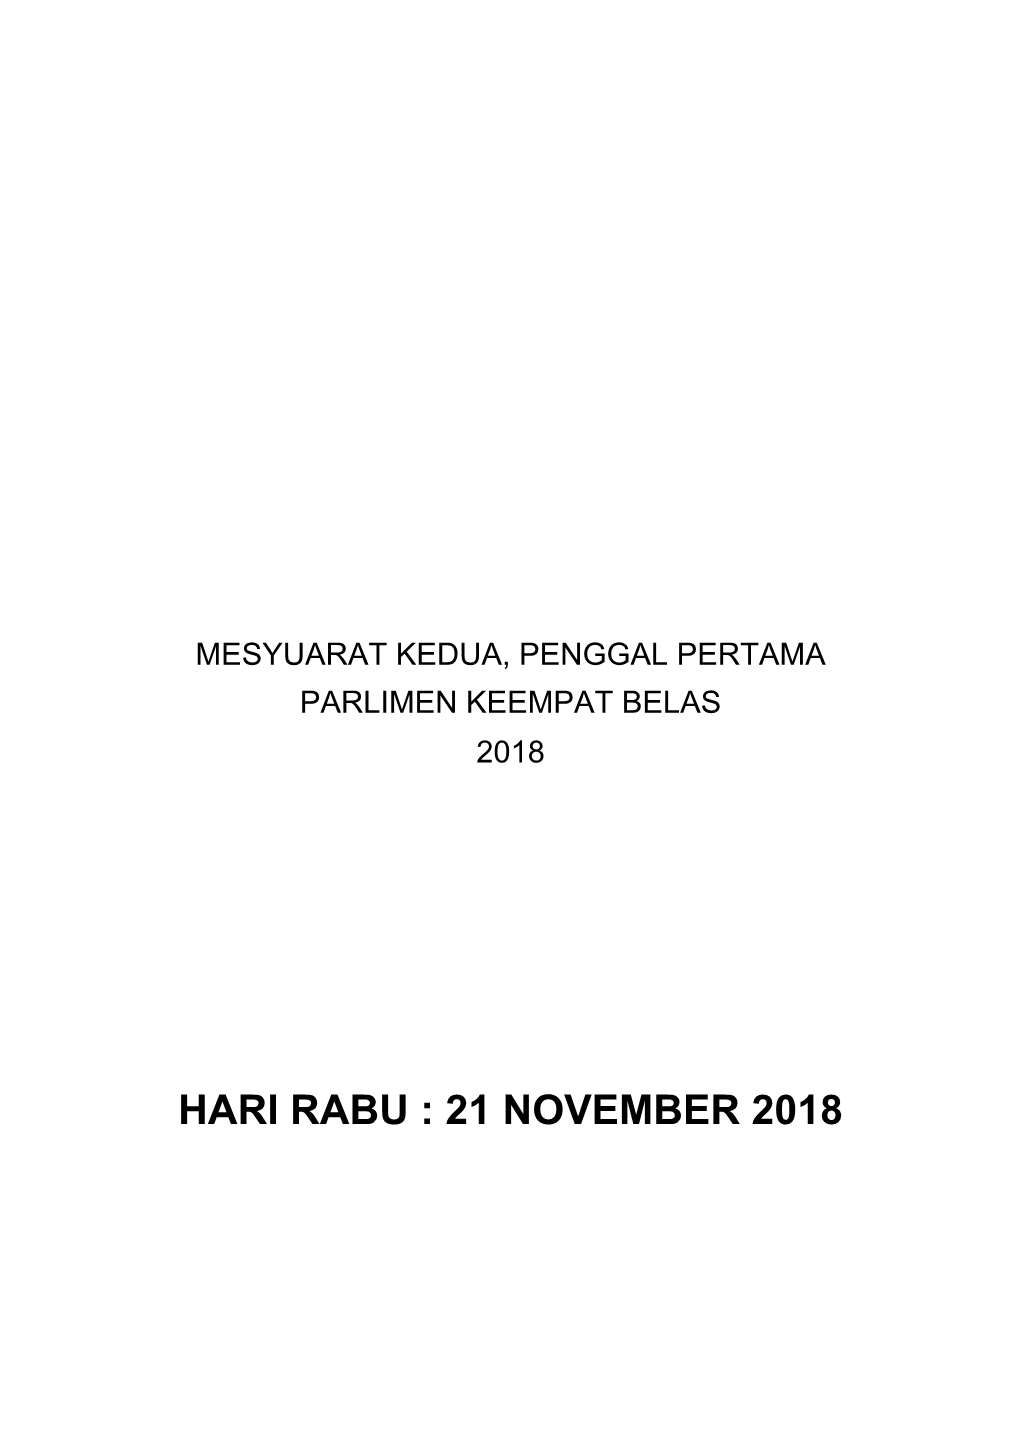 Hari Rabu : 21 November 2018 No